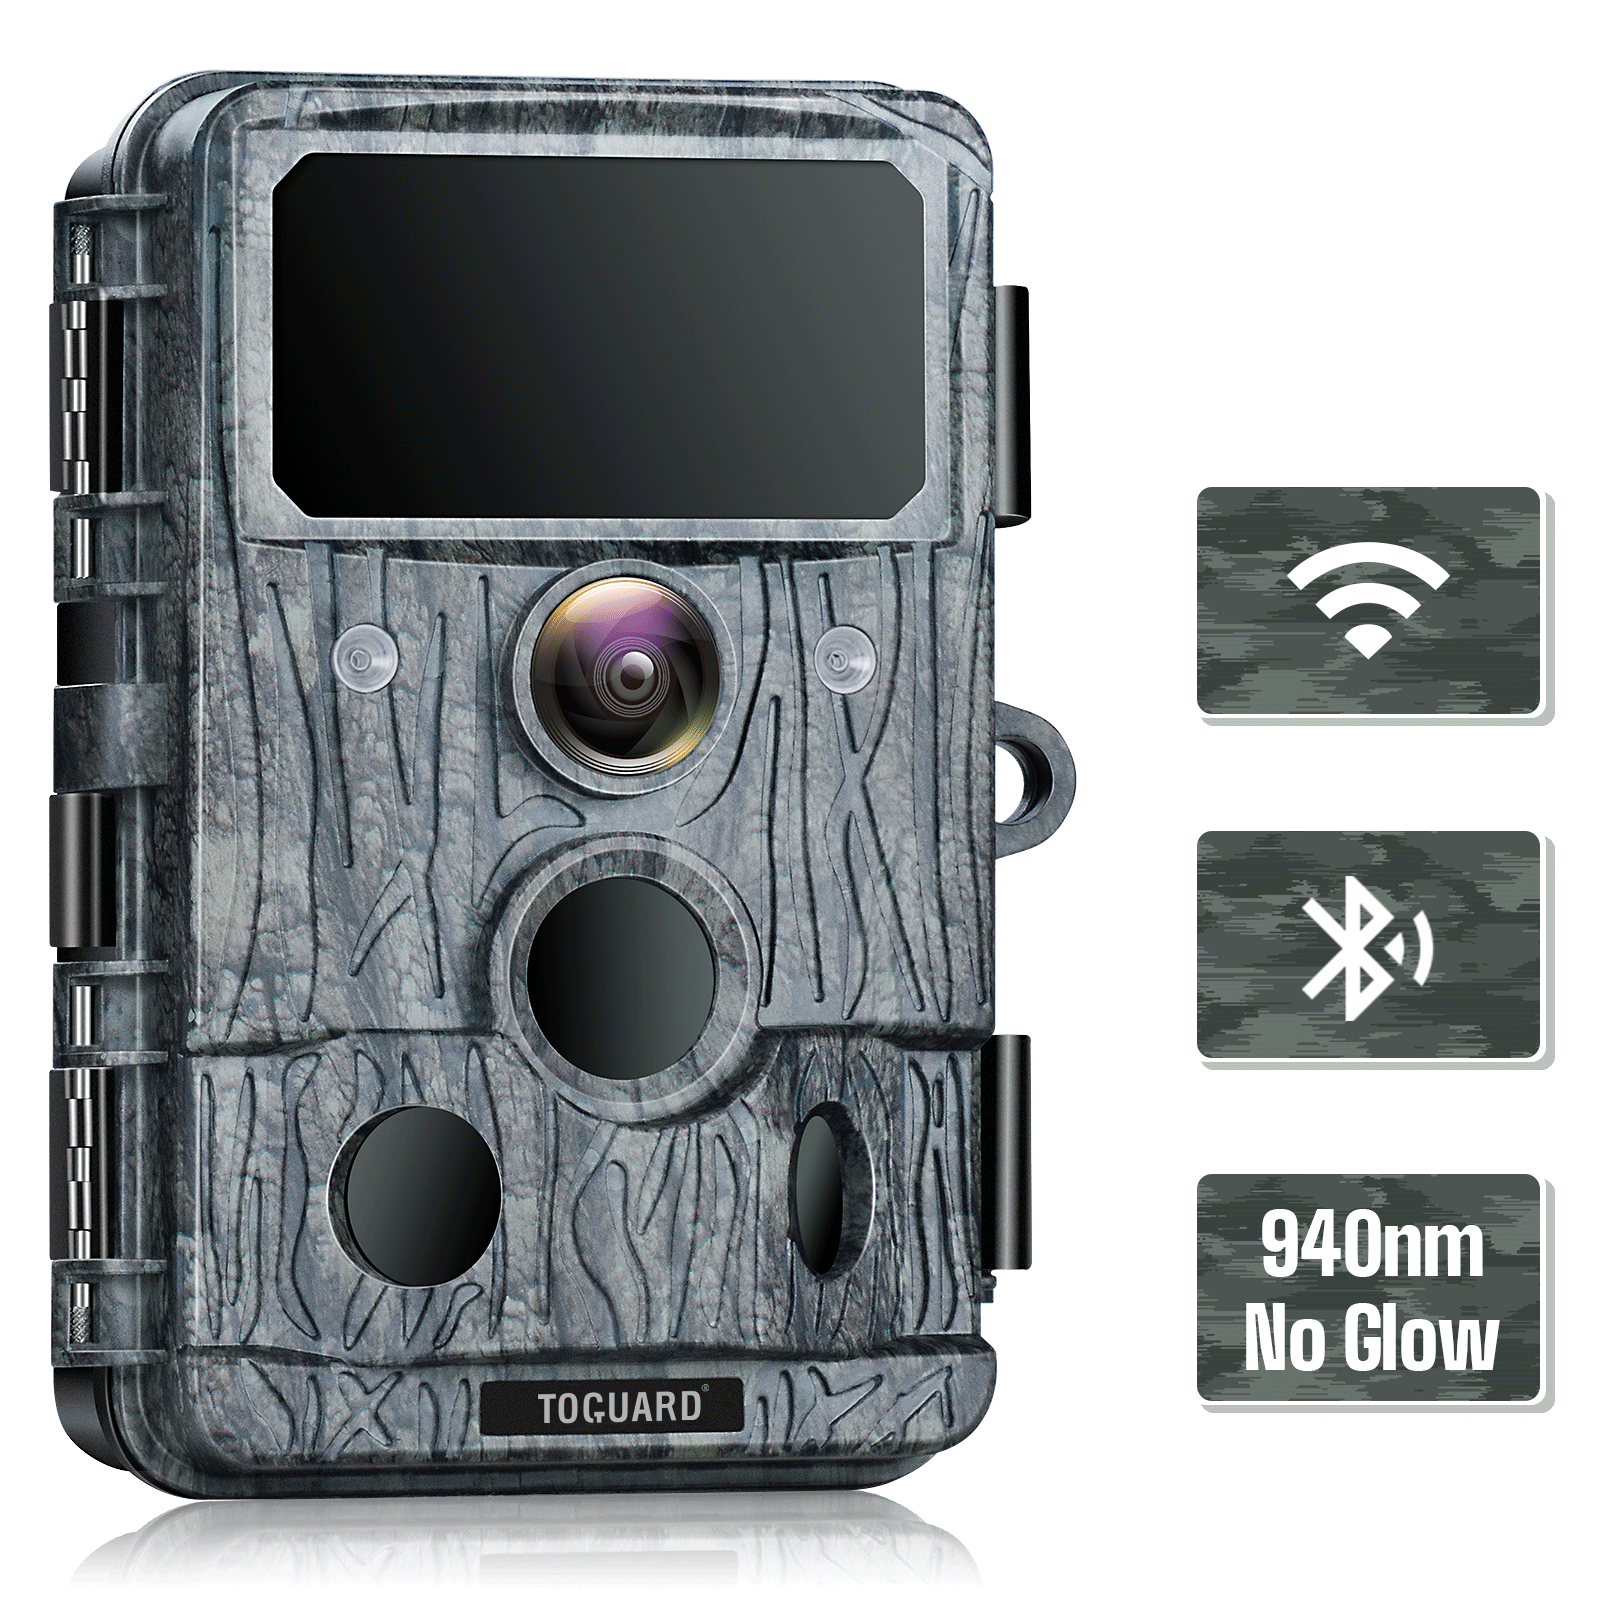 4K WIFI Trail Camera 30MP Bluetooth Game Hunting Cam Night Vision SONY Sensor CA 